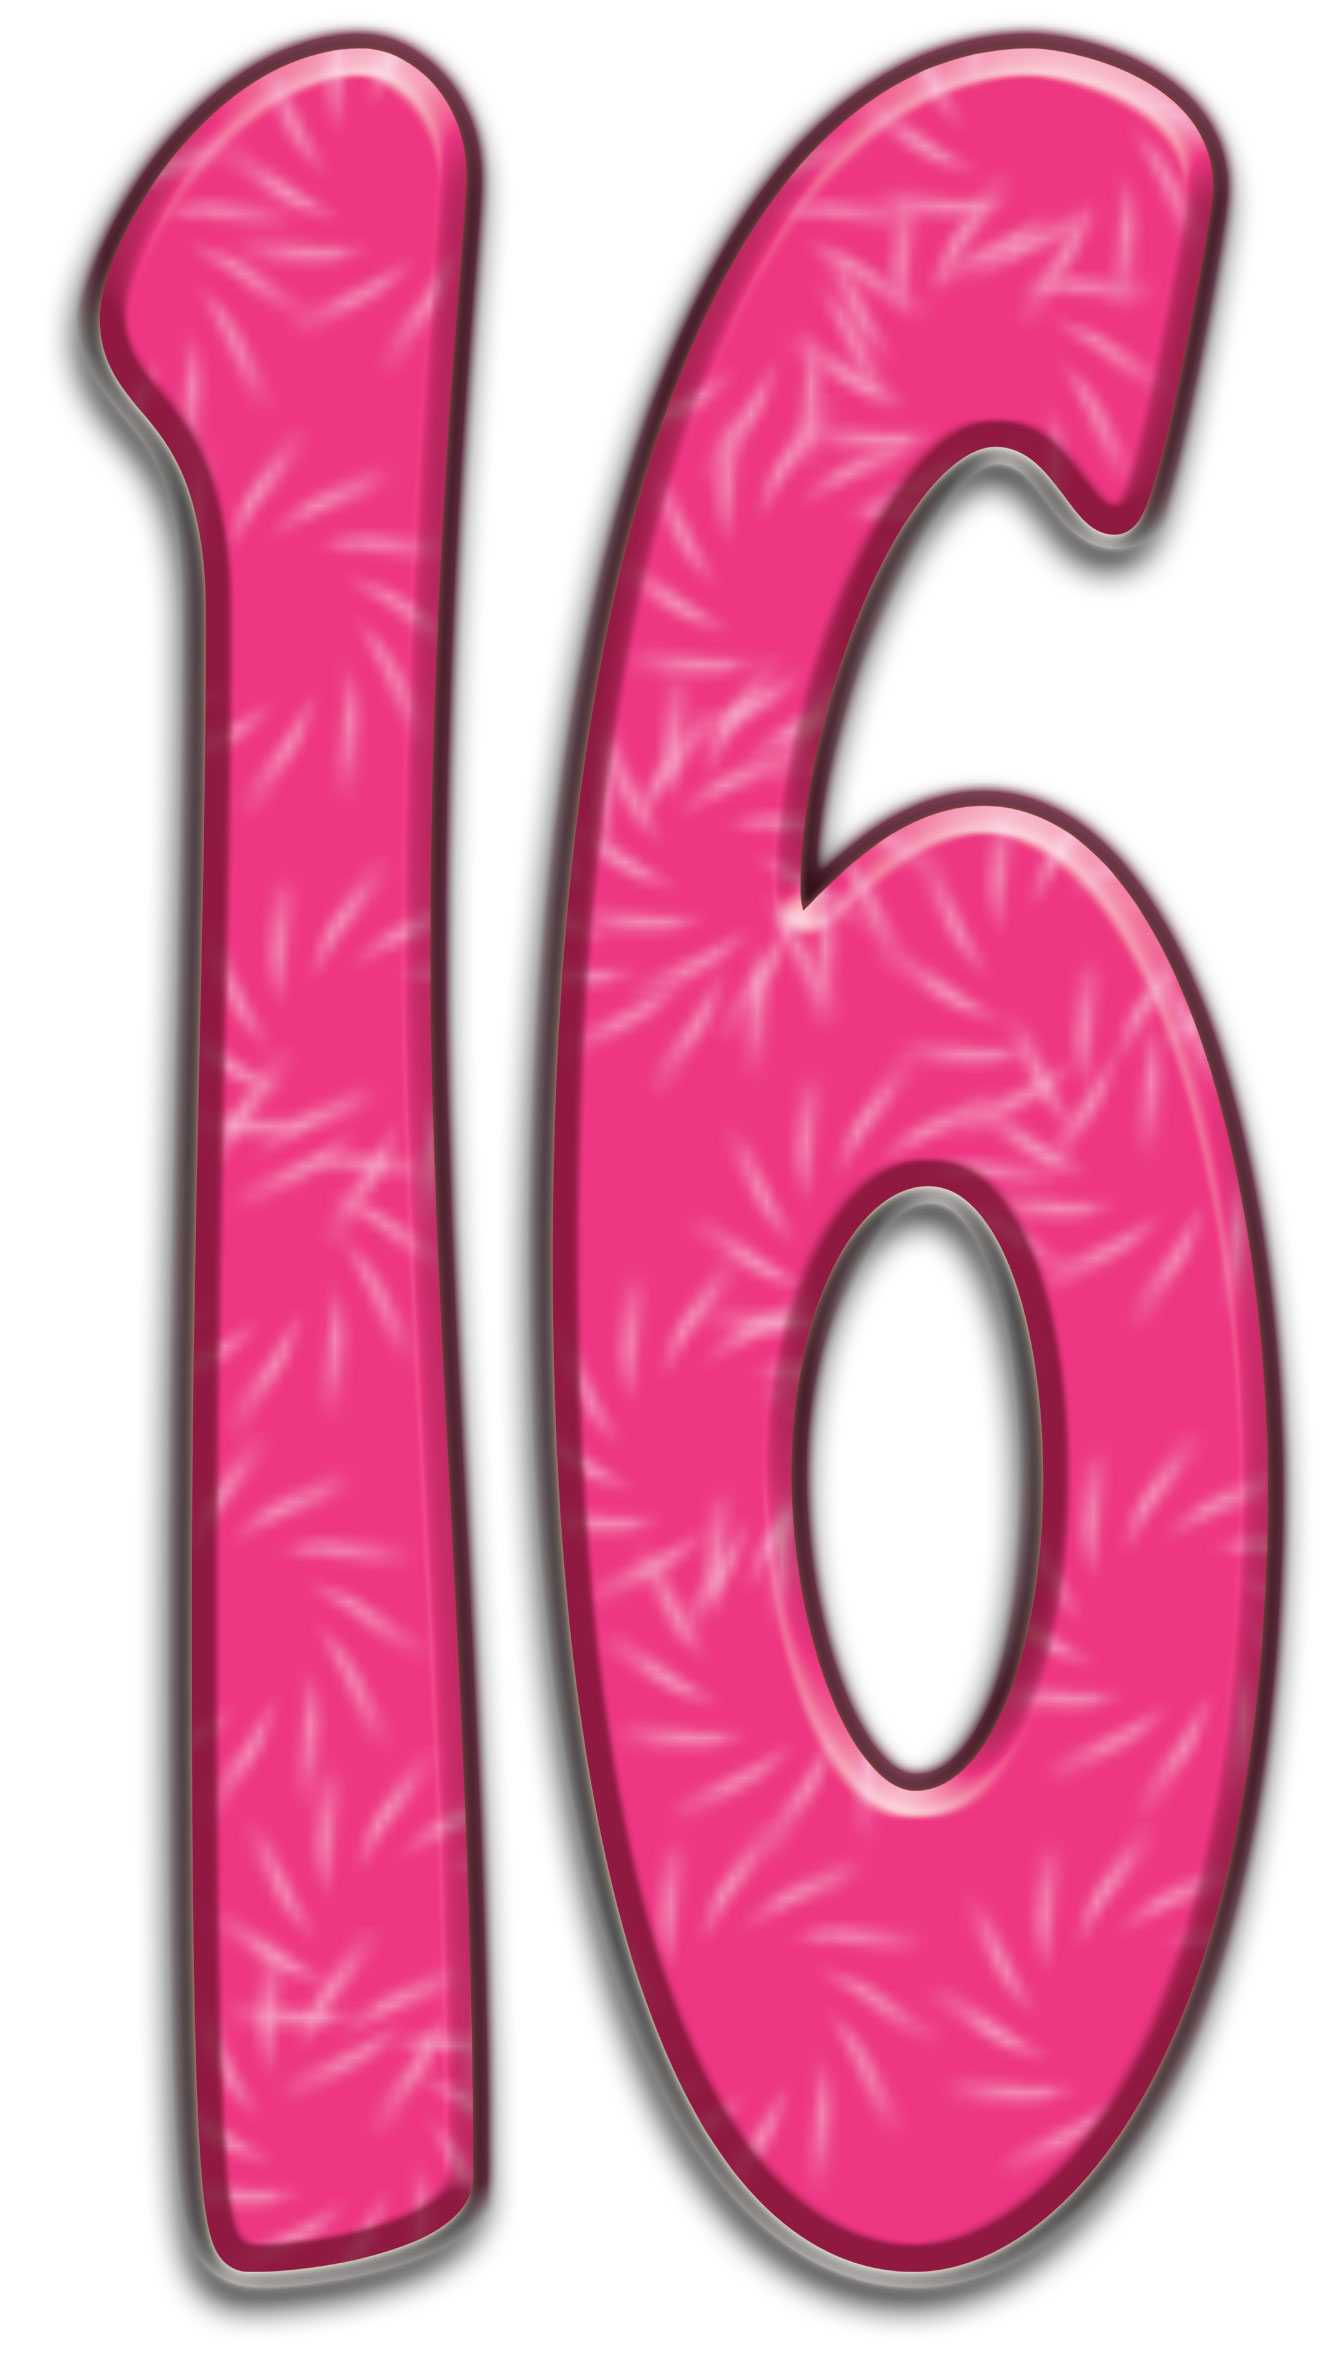 16. Цифра 16. Цифра 16 красивая. Цифра шестнадцать. Цифра 16 розовая.